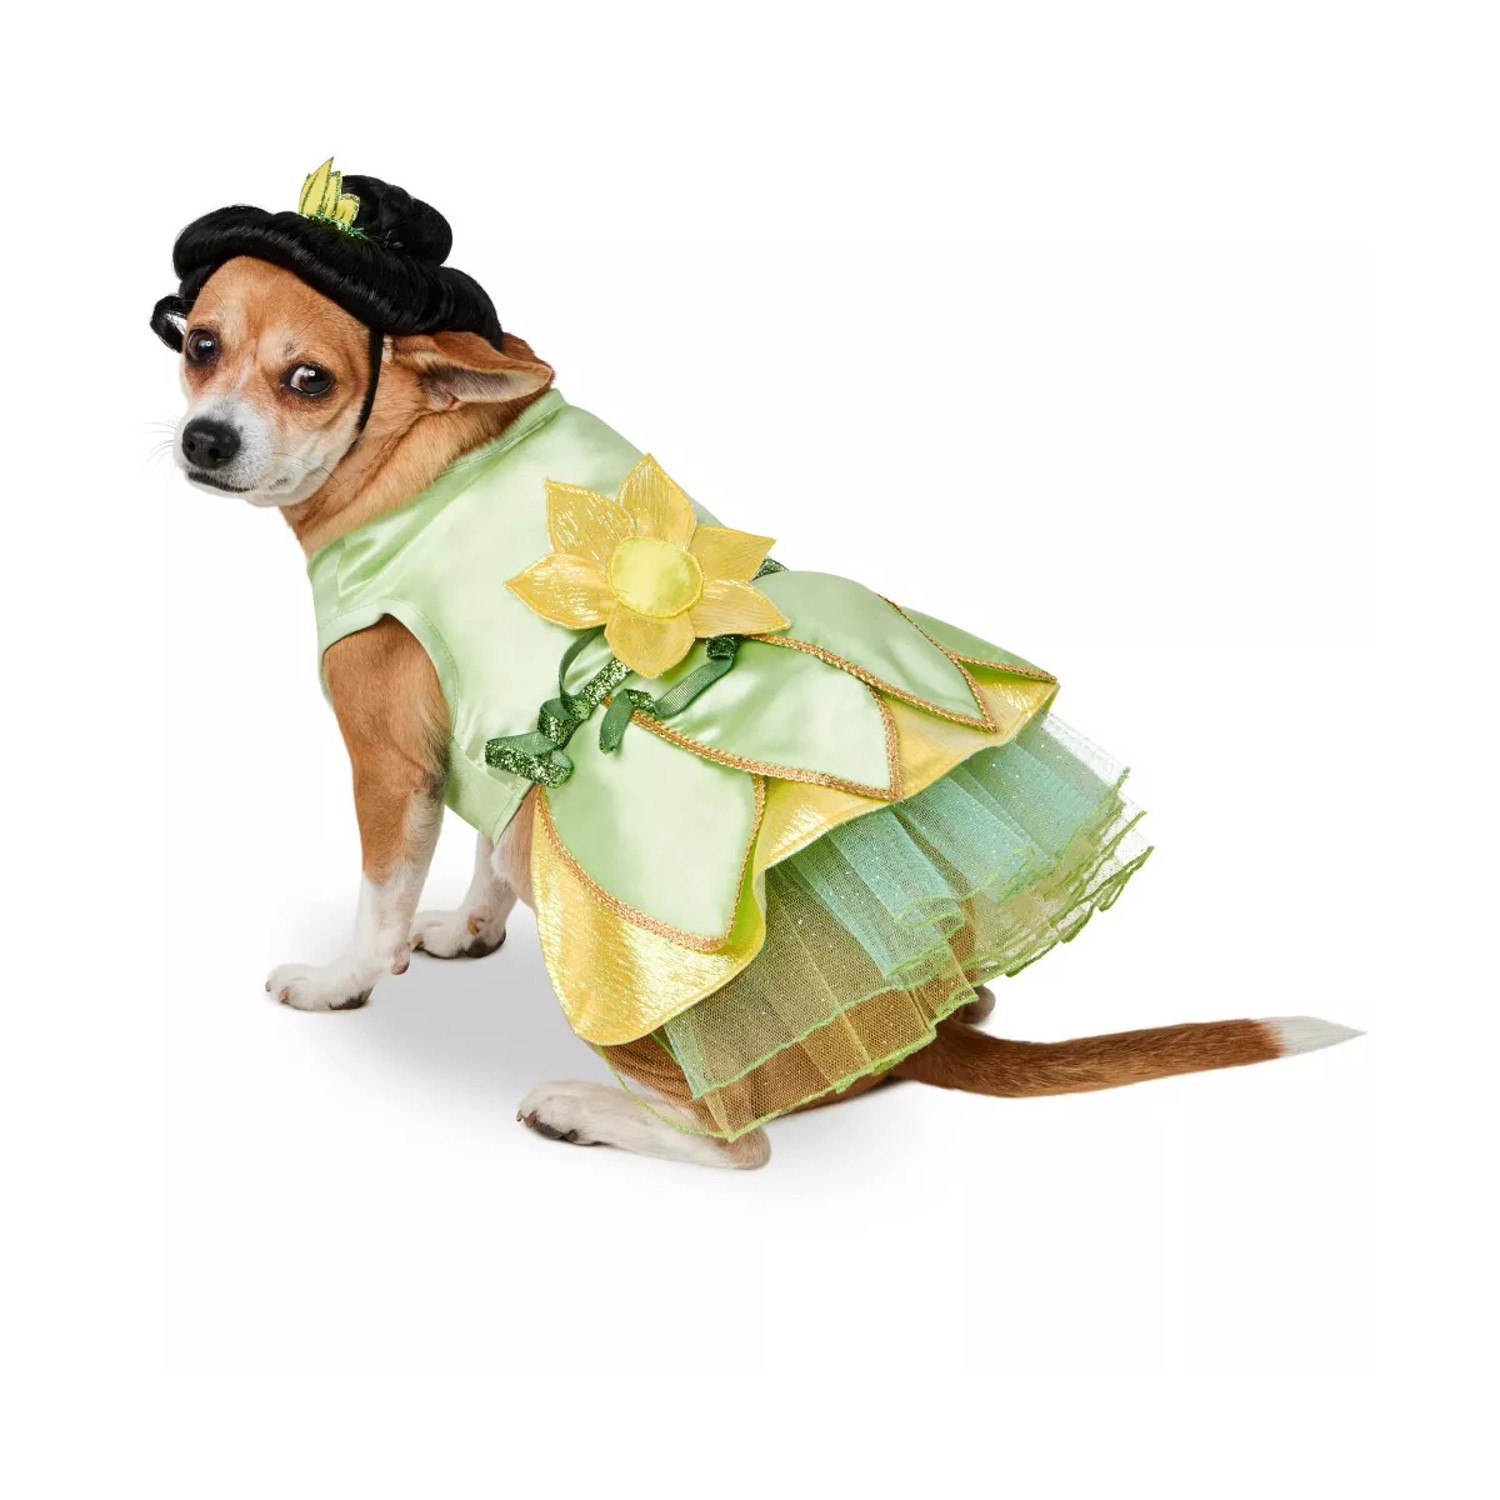 Disney Princess Tiana Dog Costume by Rubies